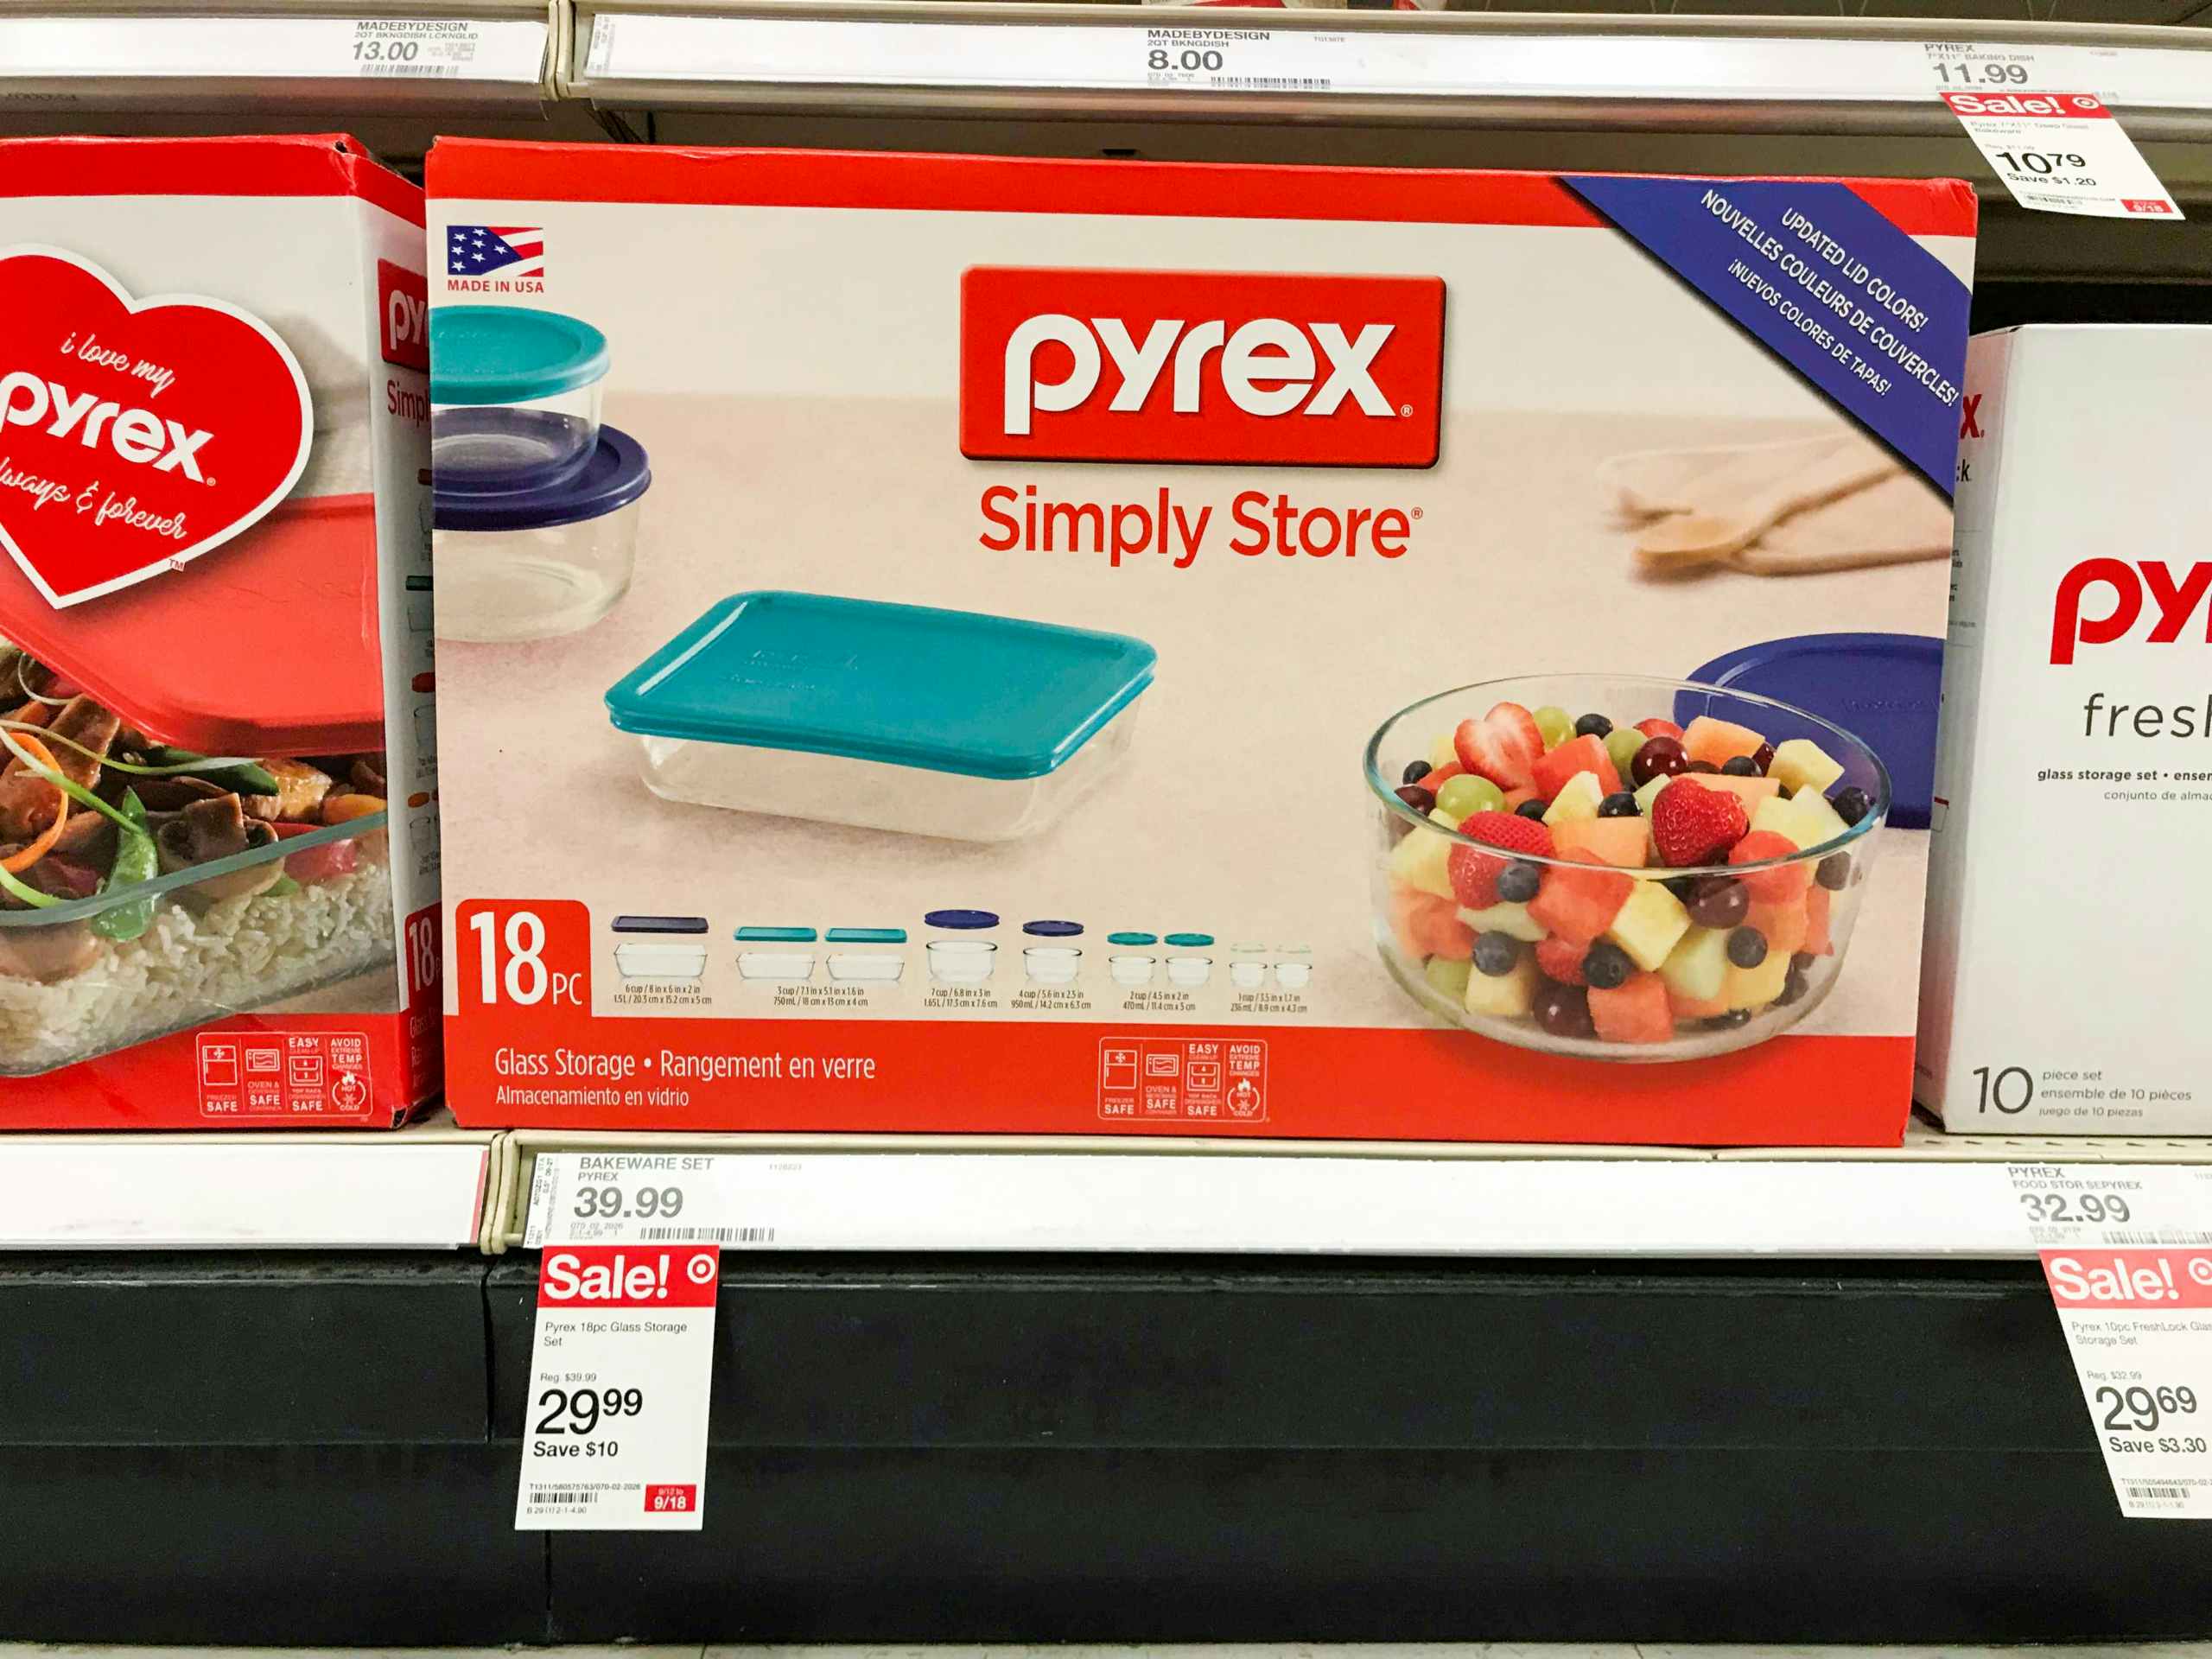 Pyrex set in box on sale on store shelf